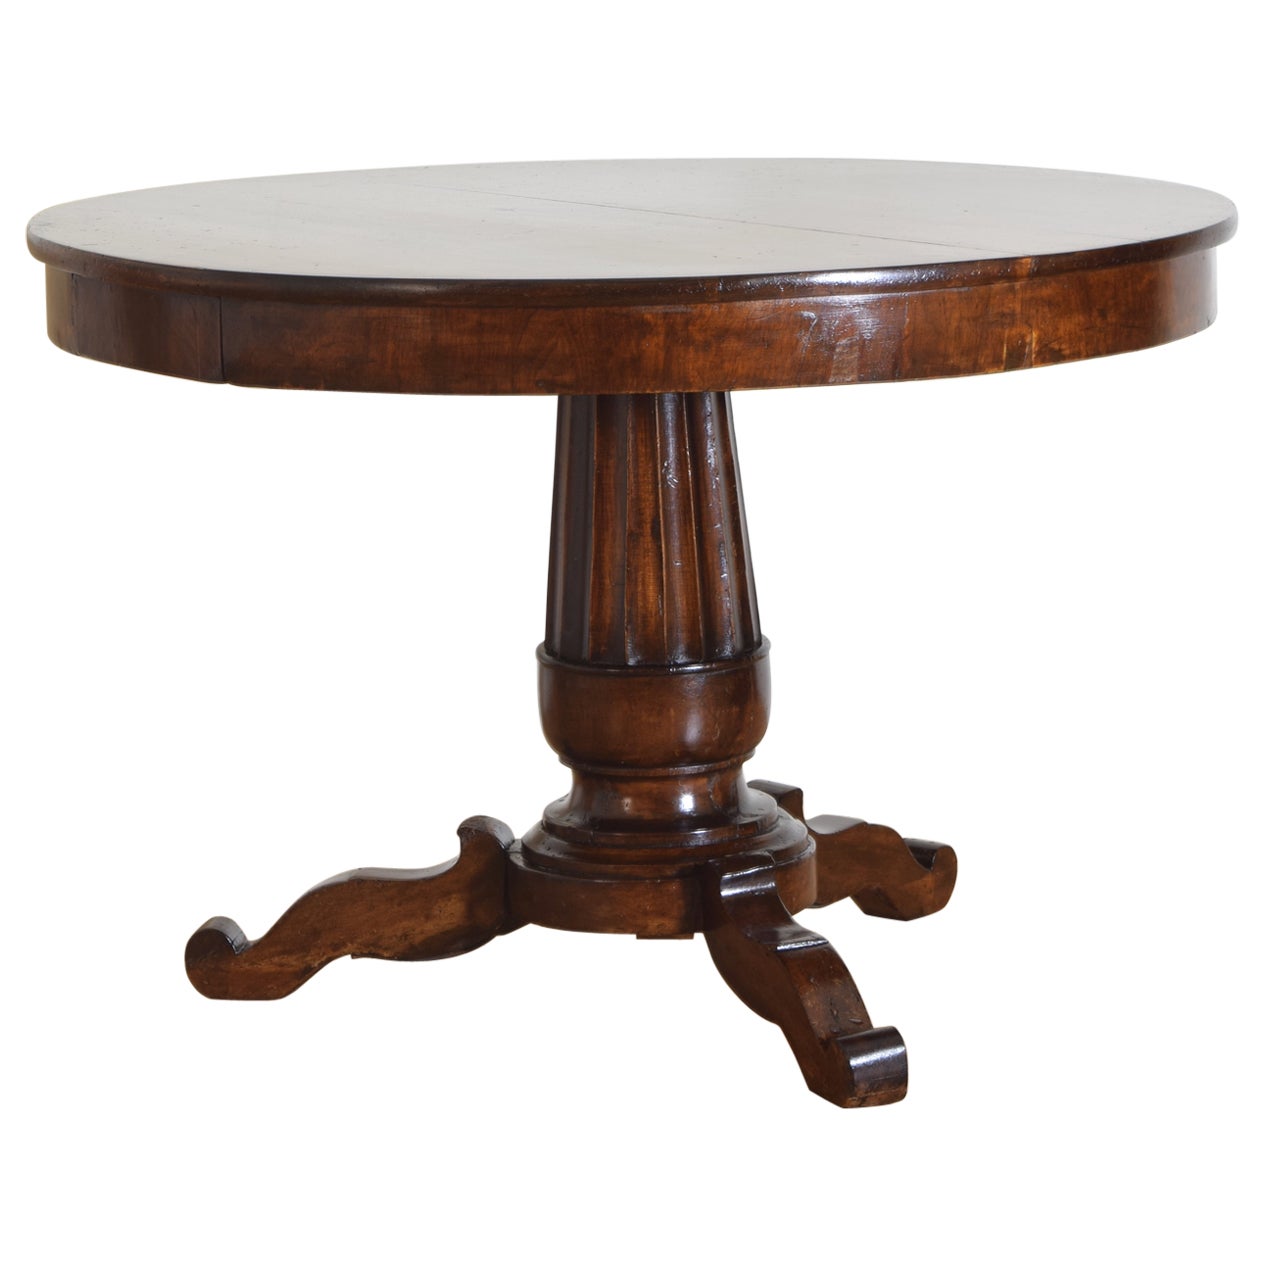 Italian, Lombardia, Walnut Neoclassic 2 Drawer Center Table, ca. 1835